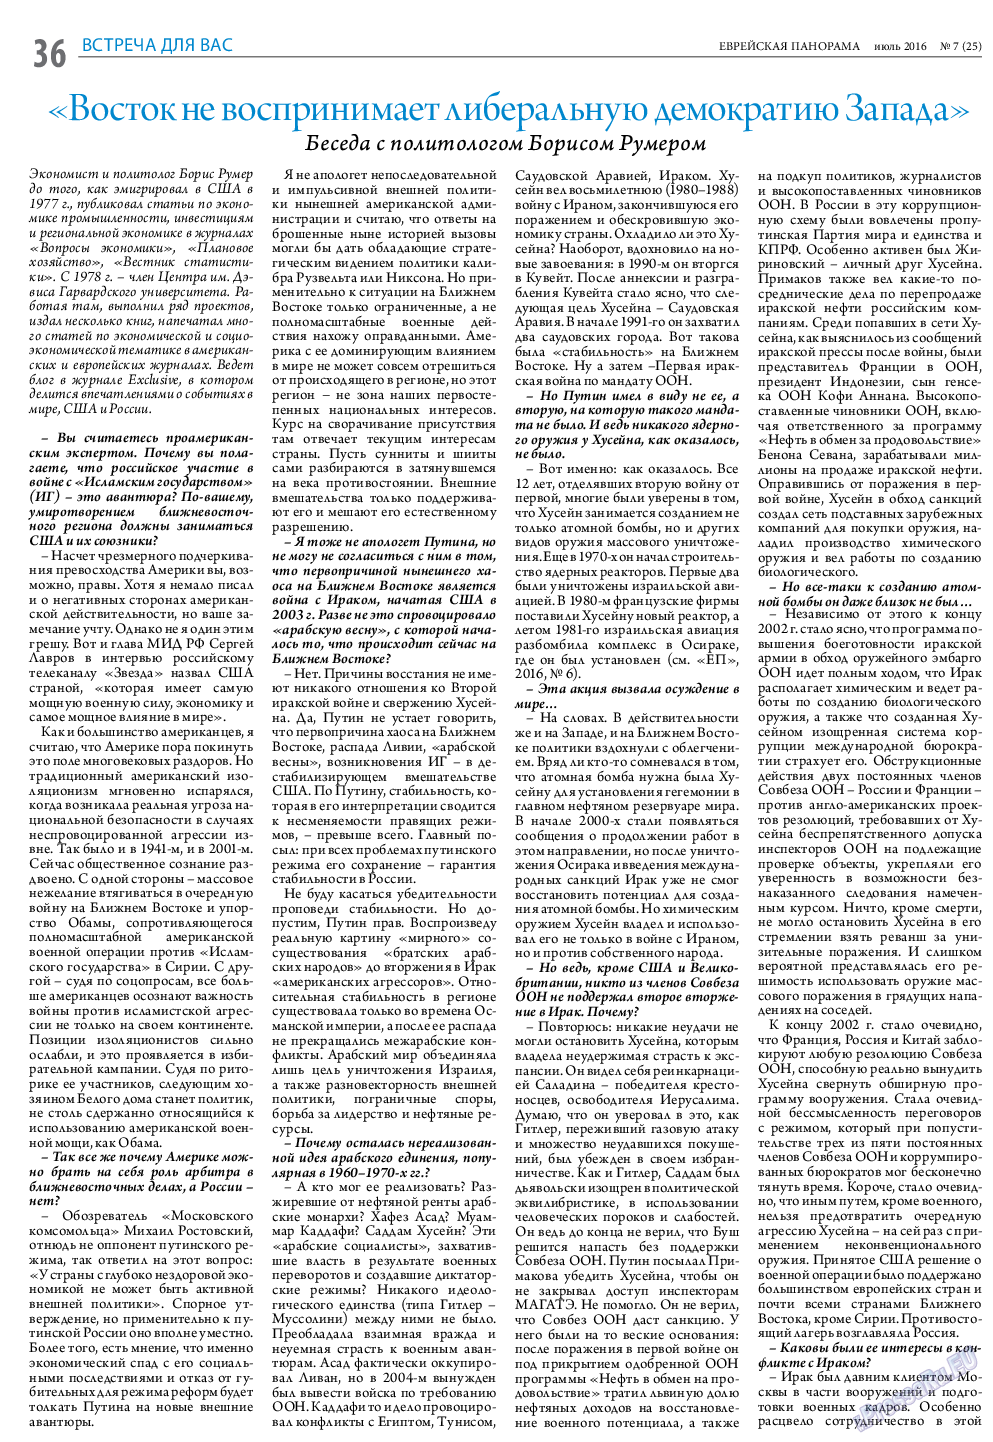 Еврейская панорама, газета. 2016 №7 стр.36